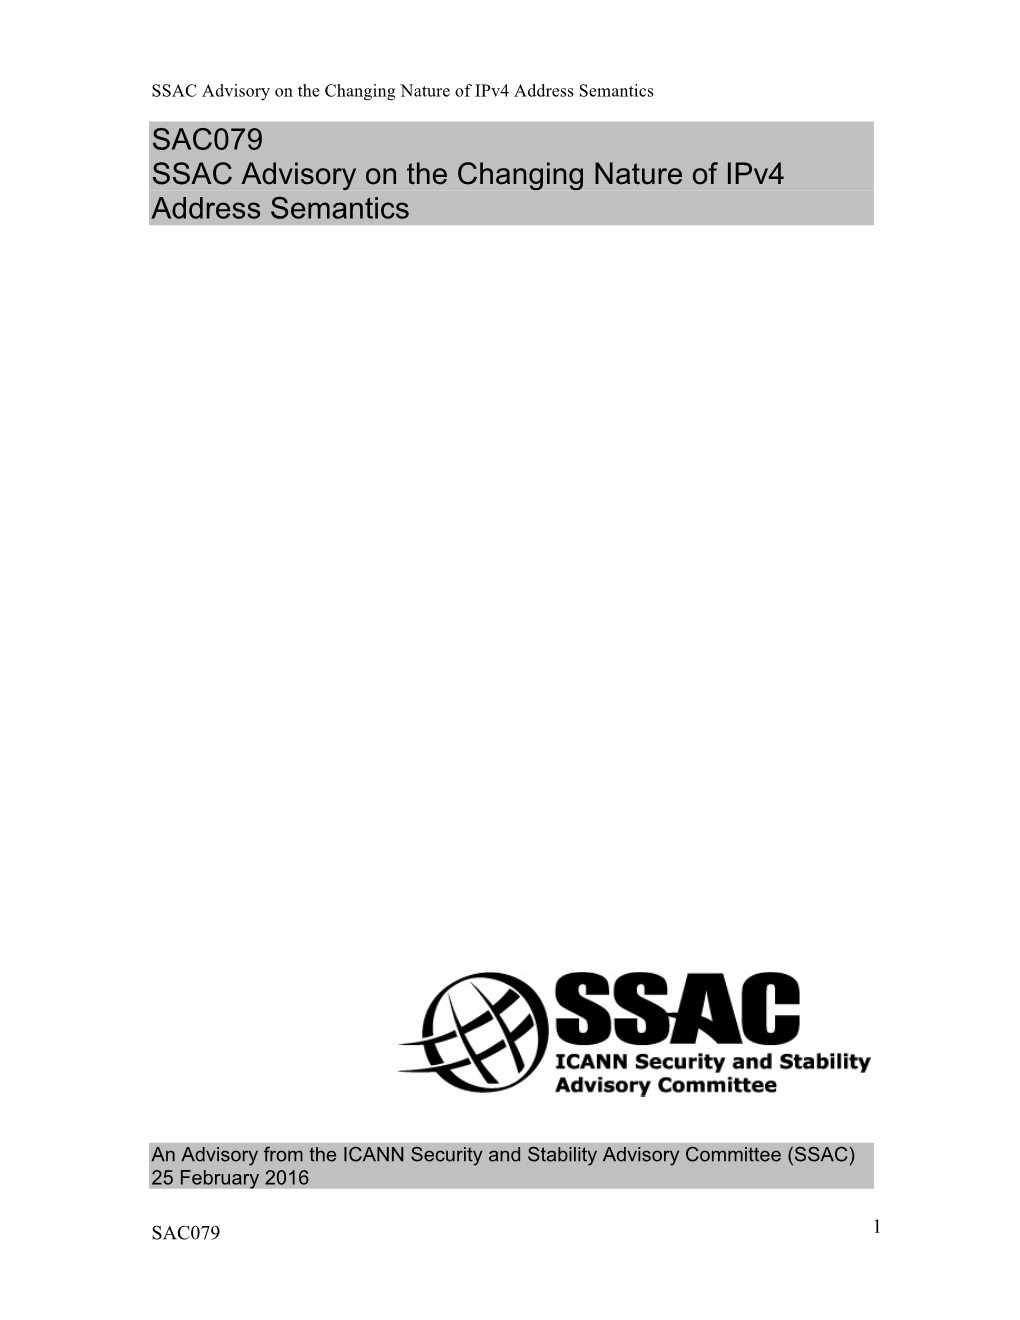 SAC079 SSAC Advisory on the Changing Nature of Ipv4 Address Semantics